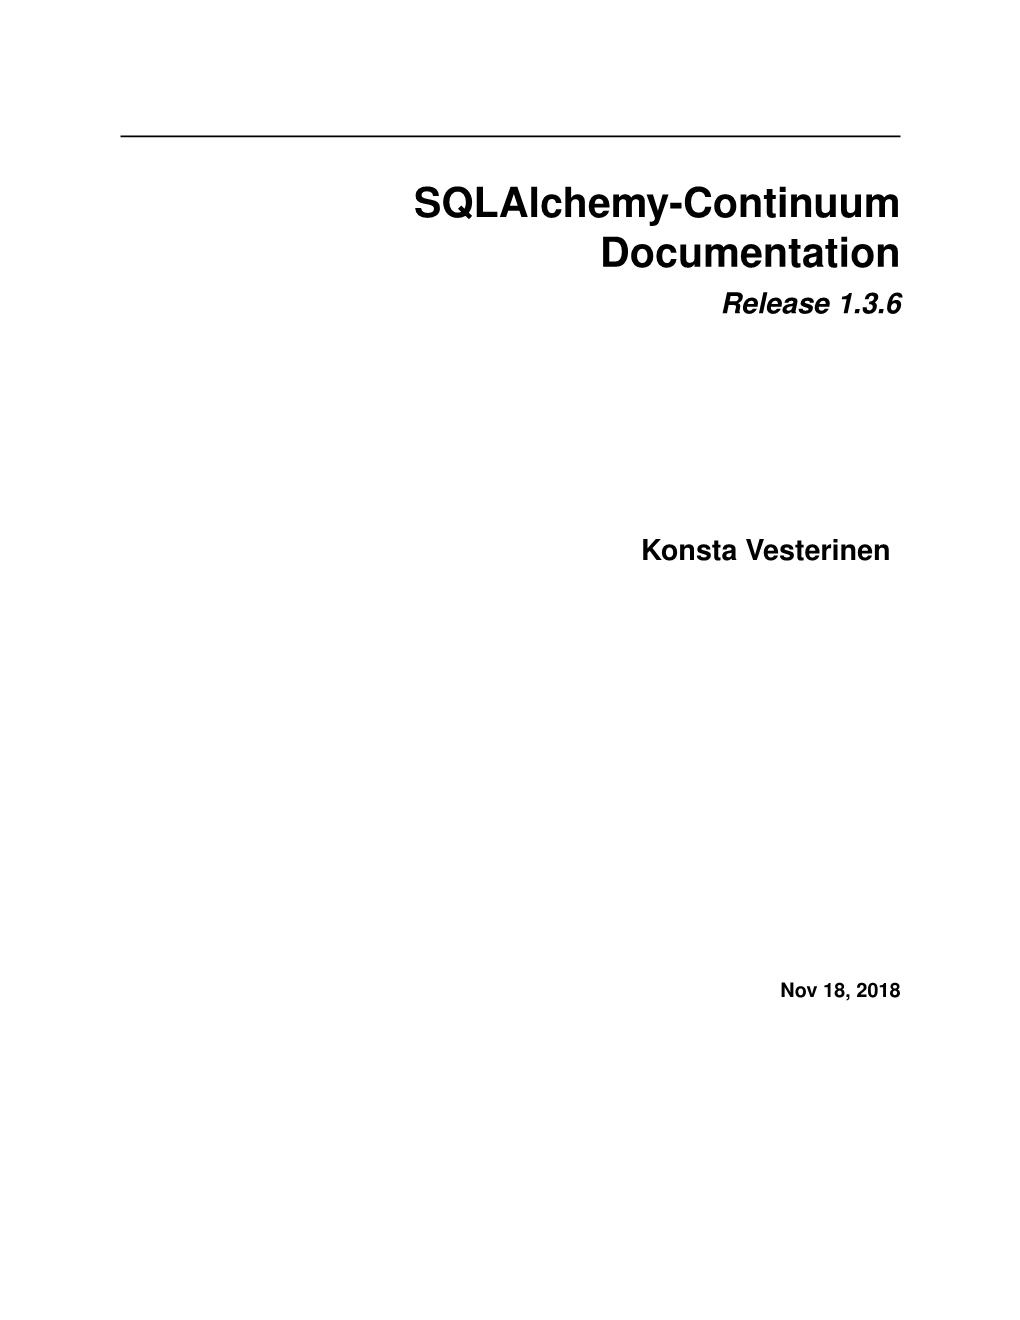 Sqlalchemy-Continuum Documentation Release 1.3.6